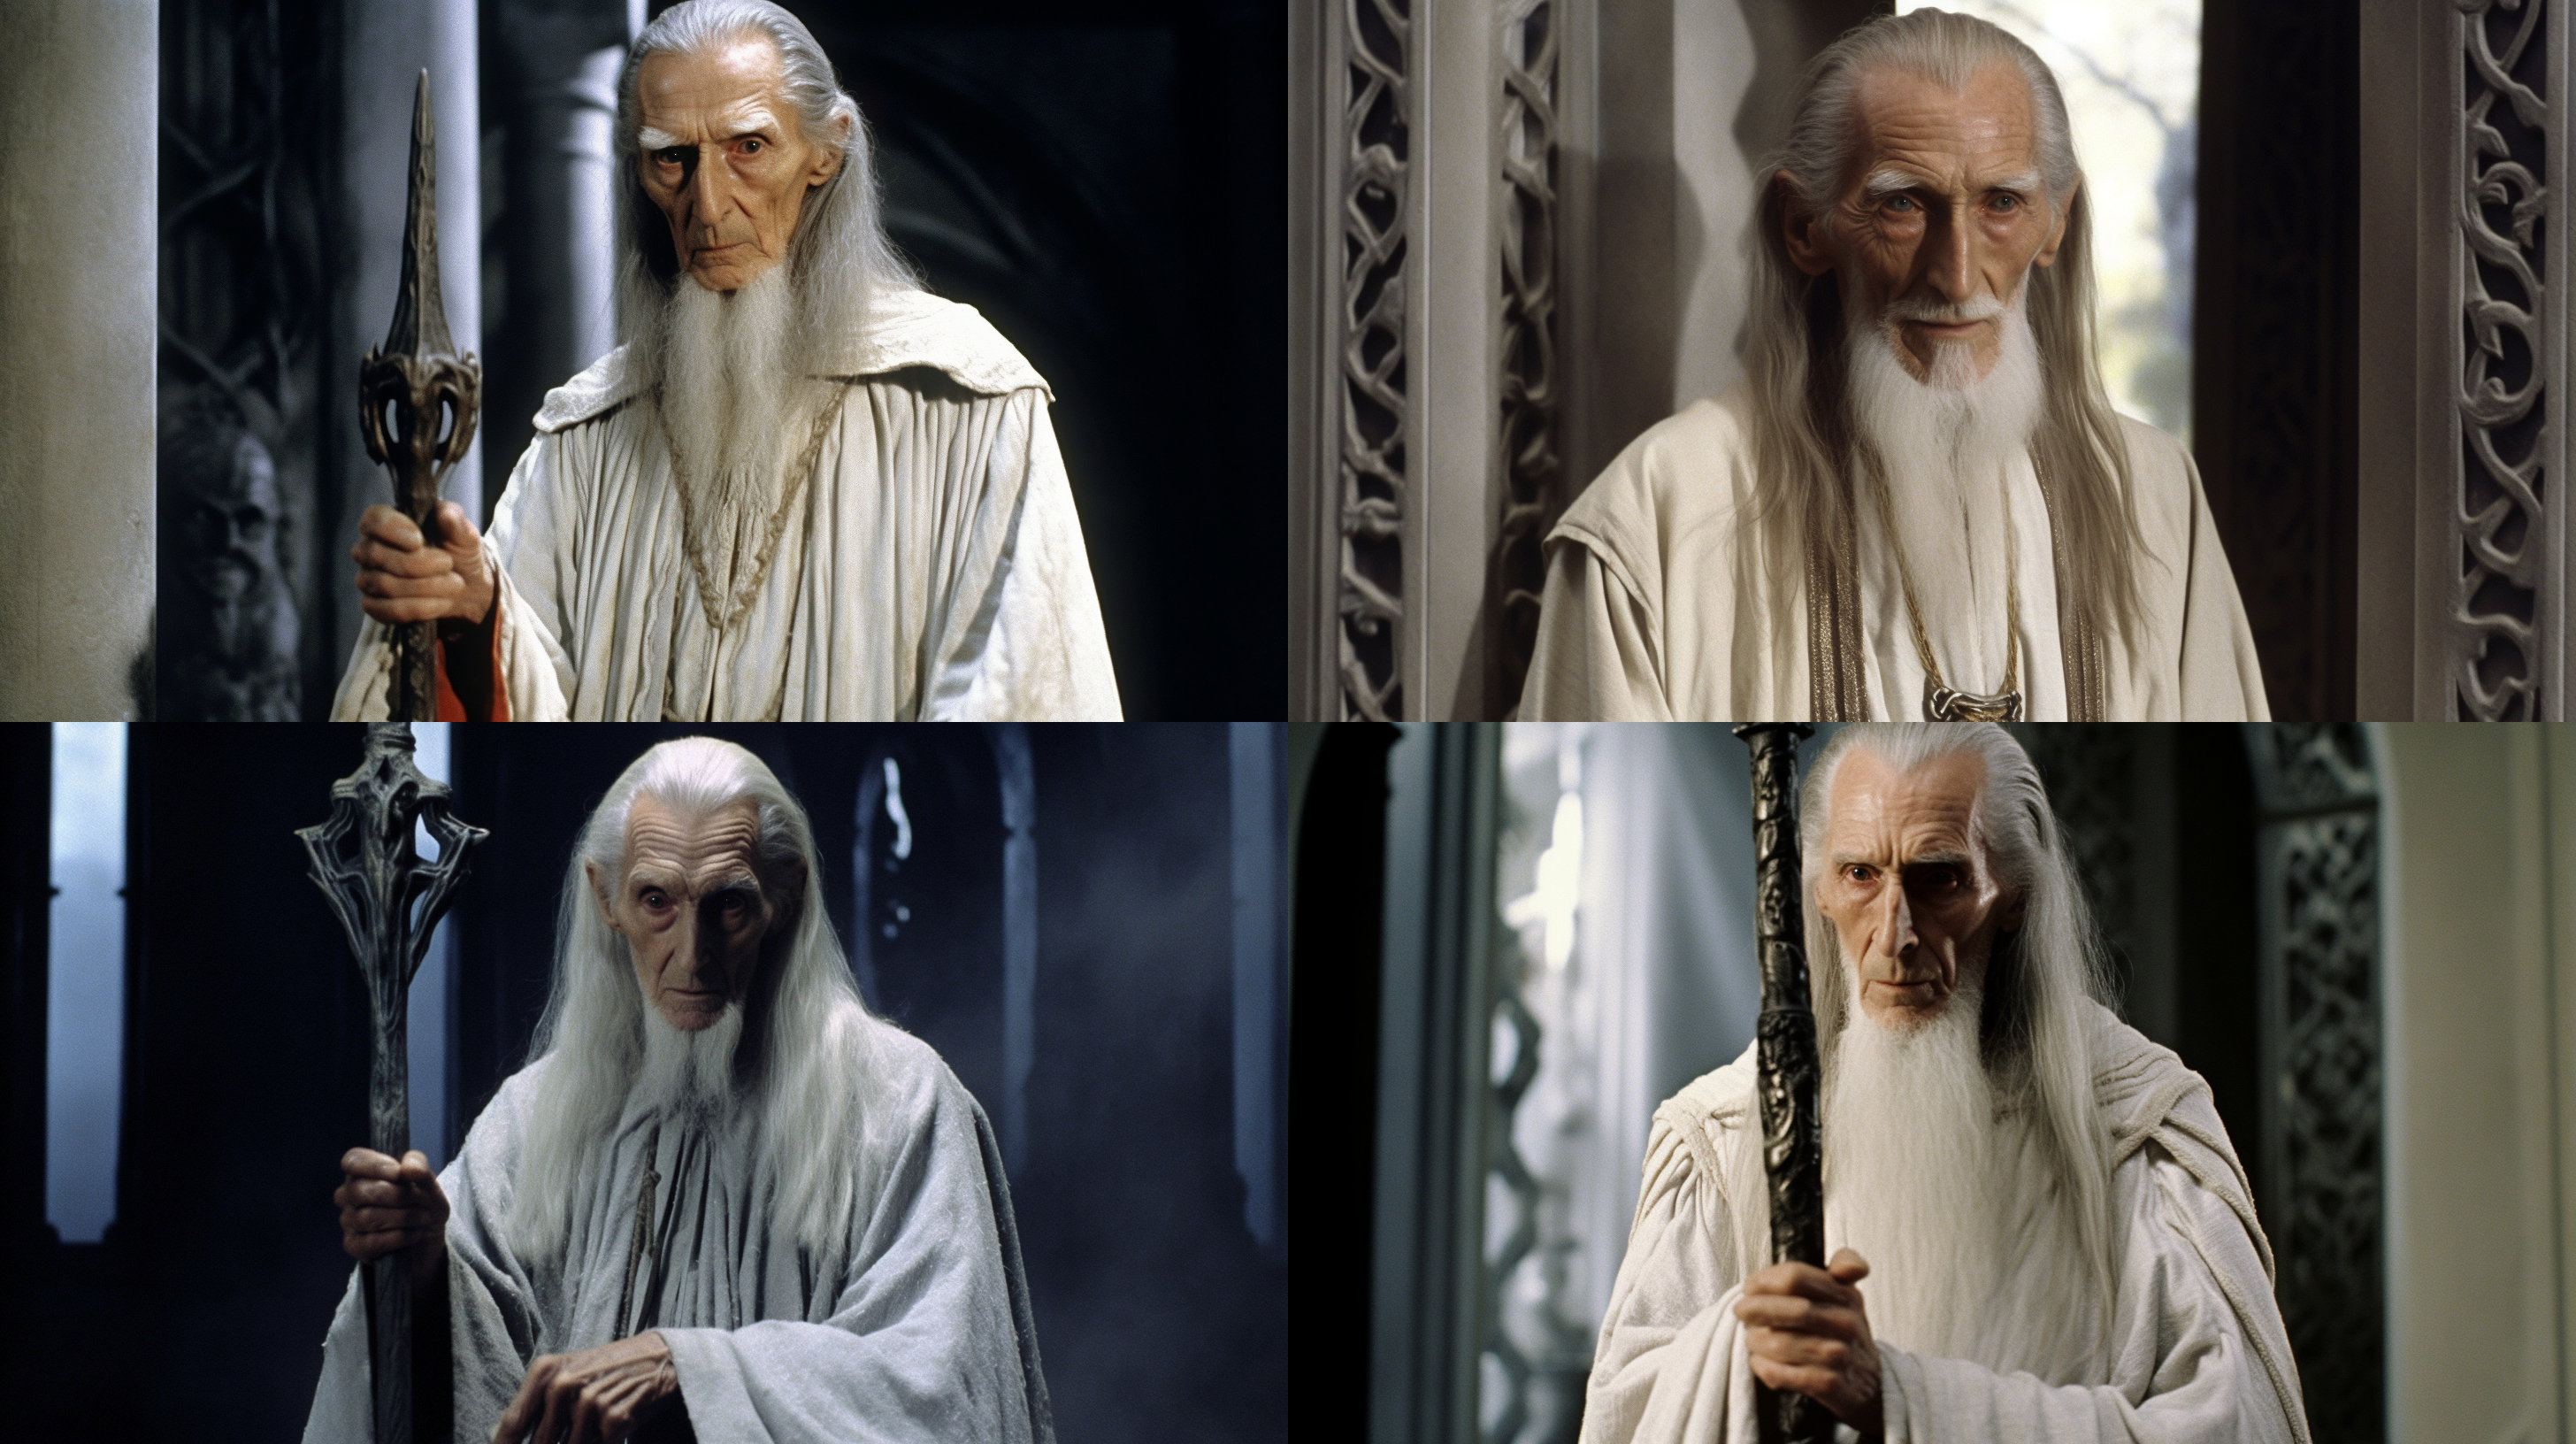 fernando172543 Peter Cushing dressed up as Saruman in a film di 9685569e 275c 47d0 b2ad ed7a1e268f5b